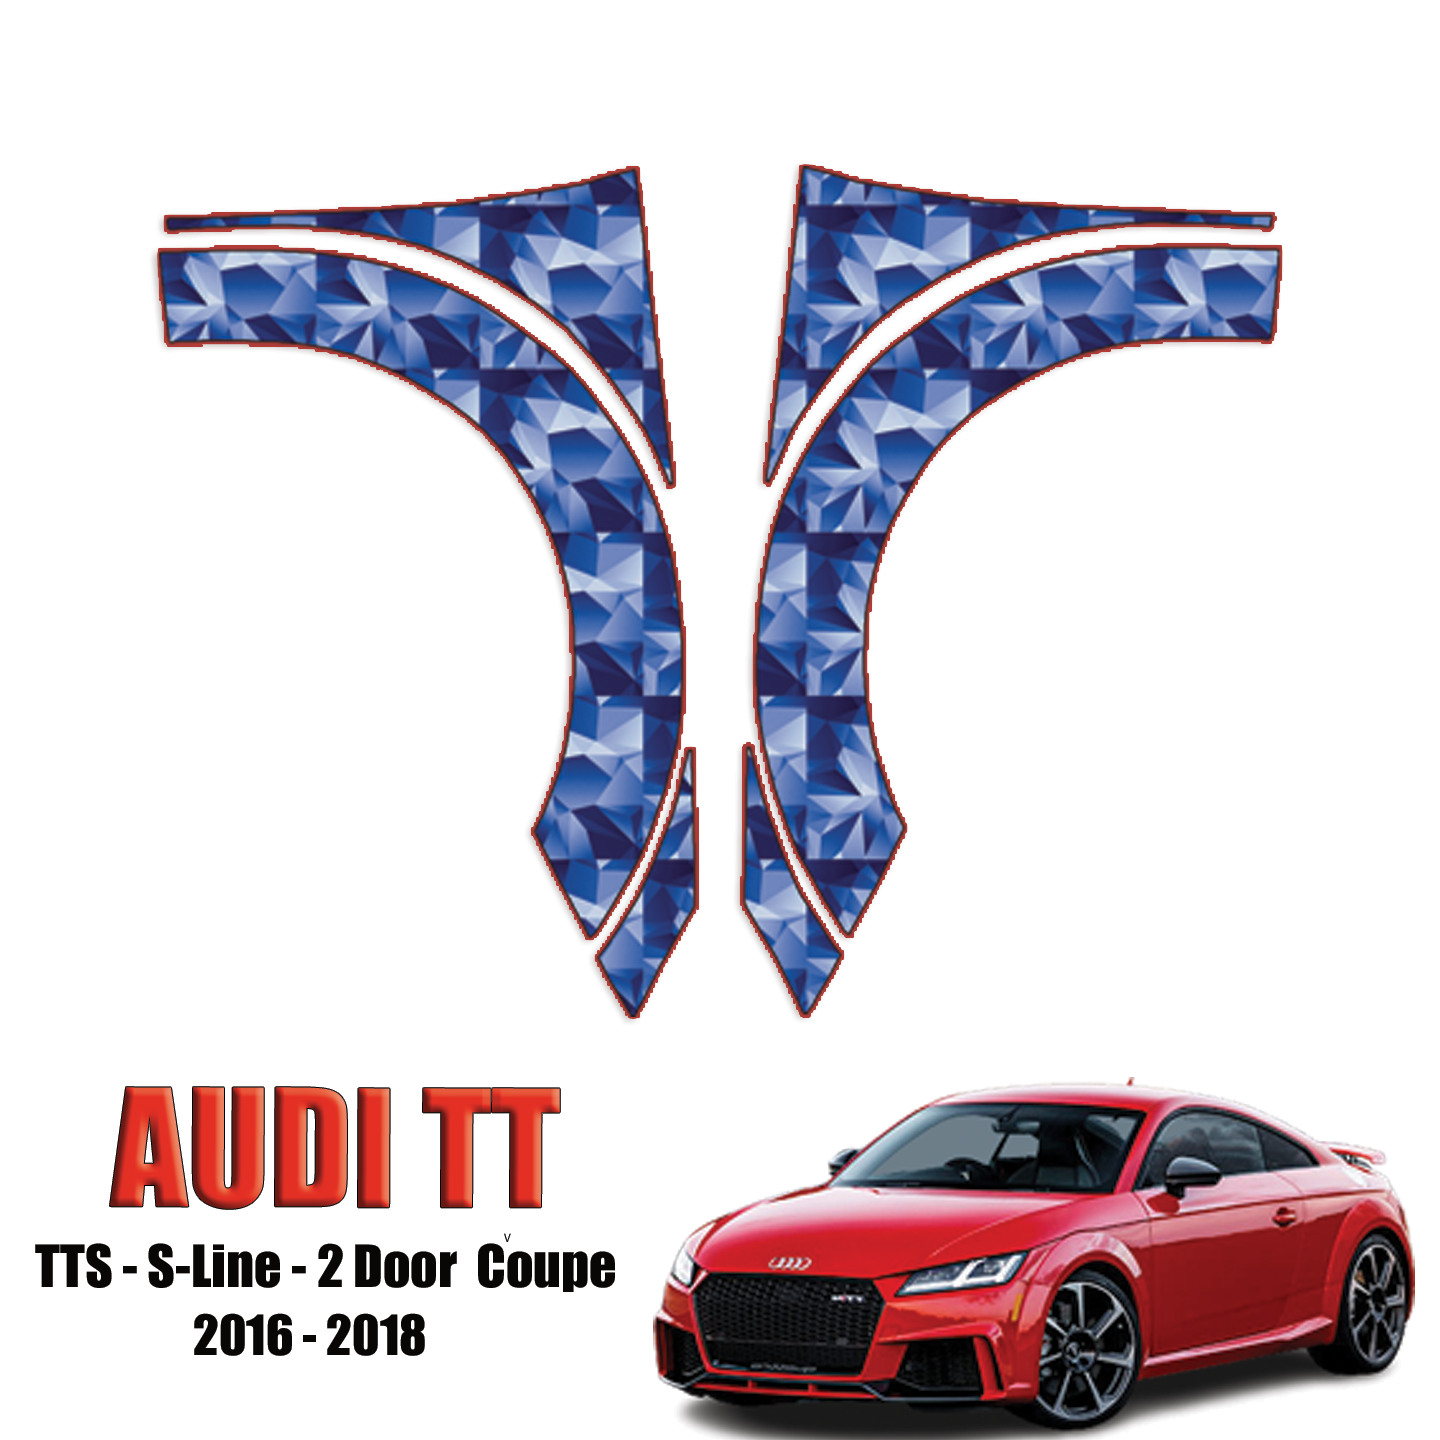 2016-2018 Audi TT – TTS, S-Line 2 door Coupe Precut Paint Protection Kit – Full Front Fenders